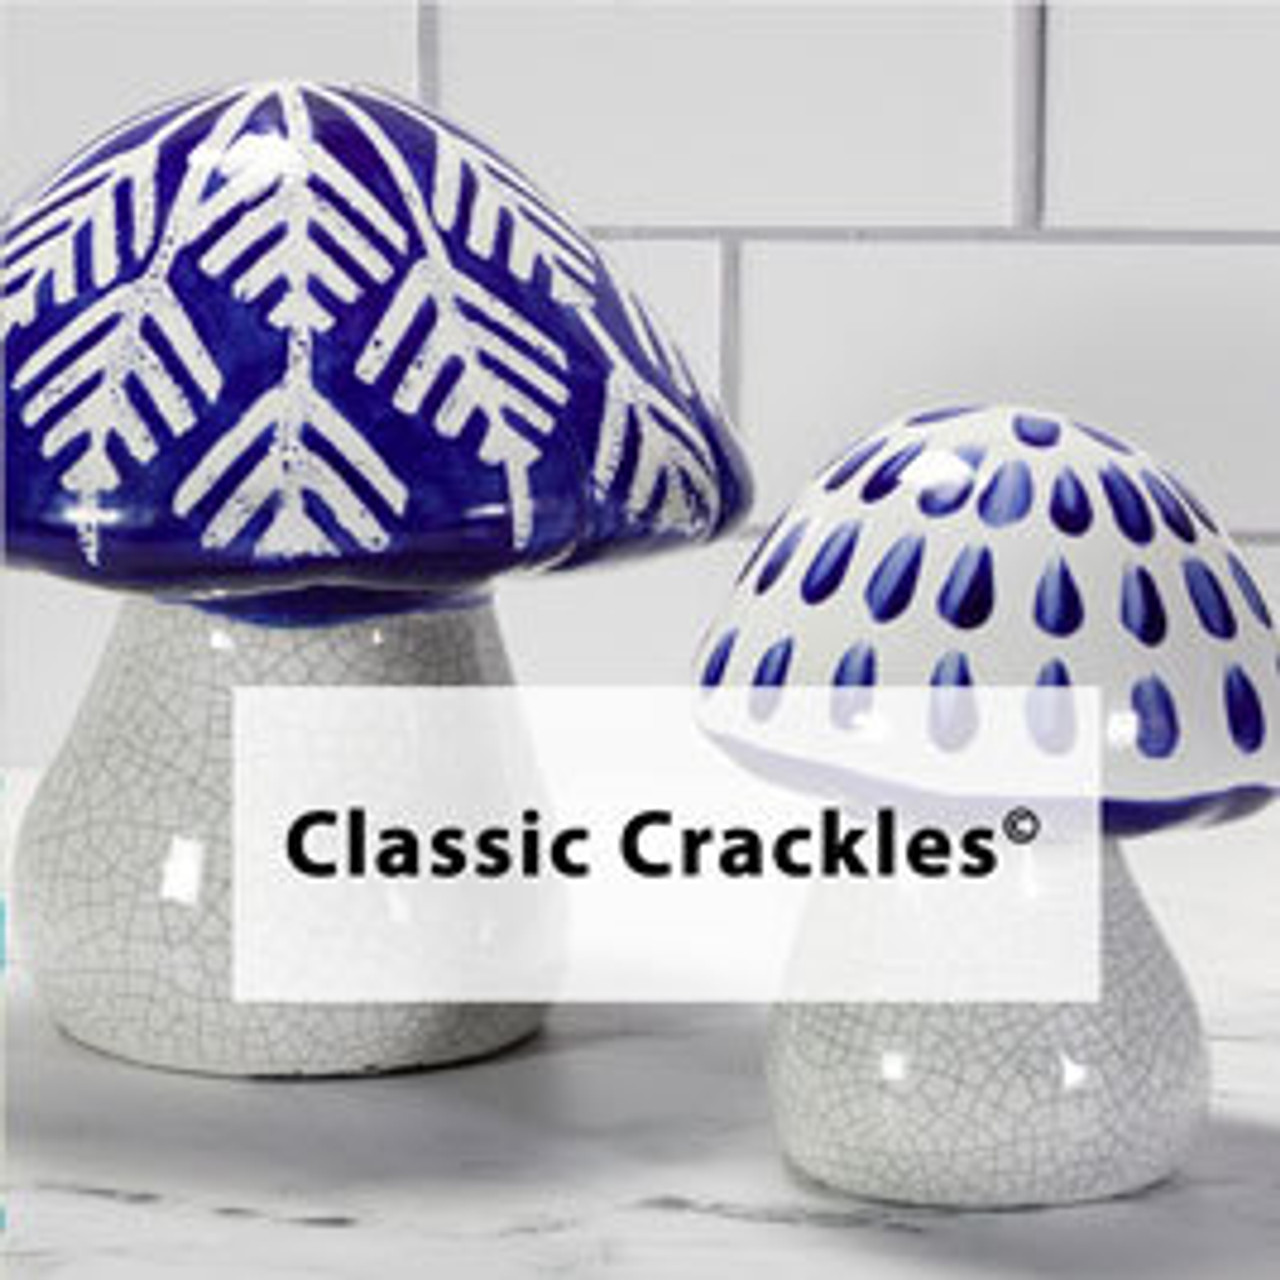 Classic Crackles